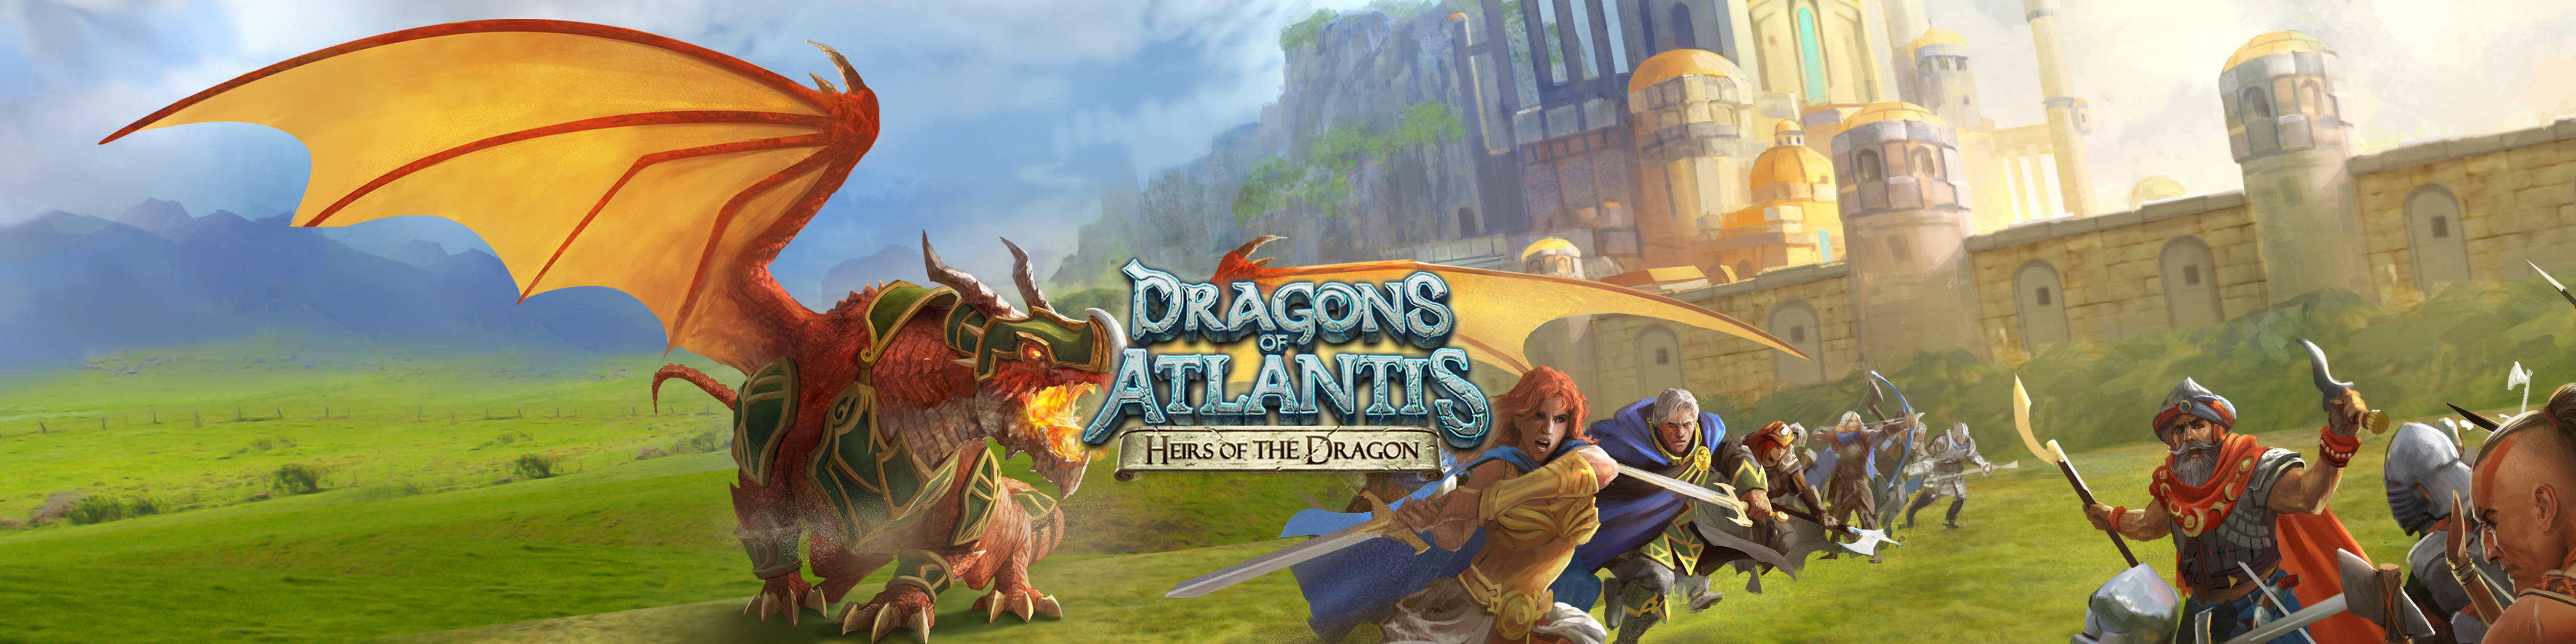 Dragons Of Atlantis Overview Apple App Store Us - roblox events atlantis